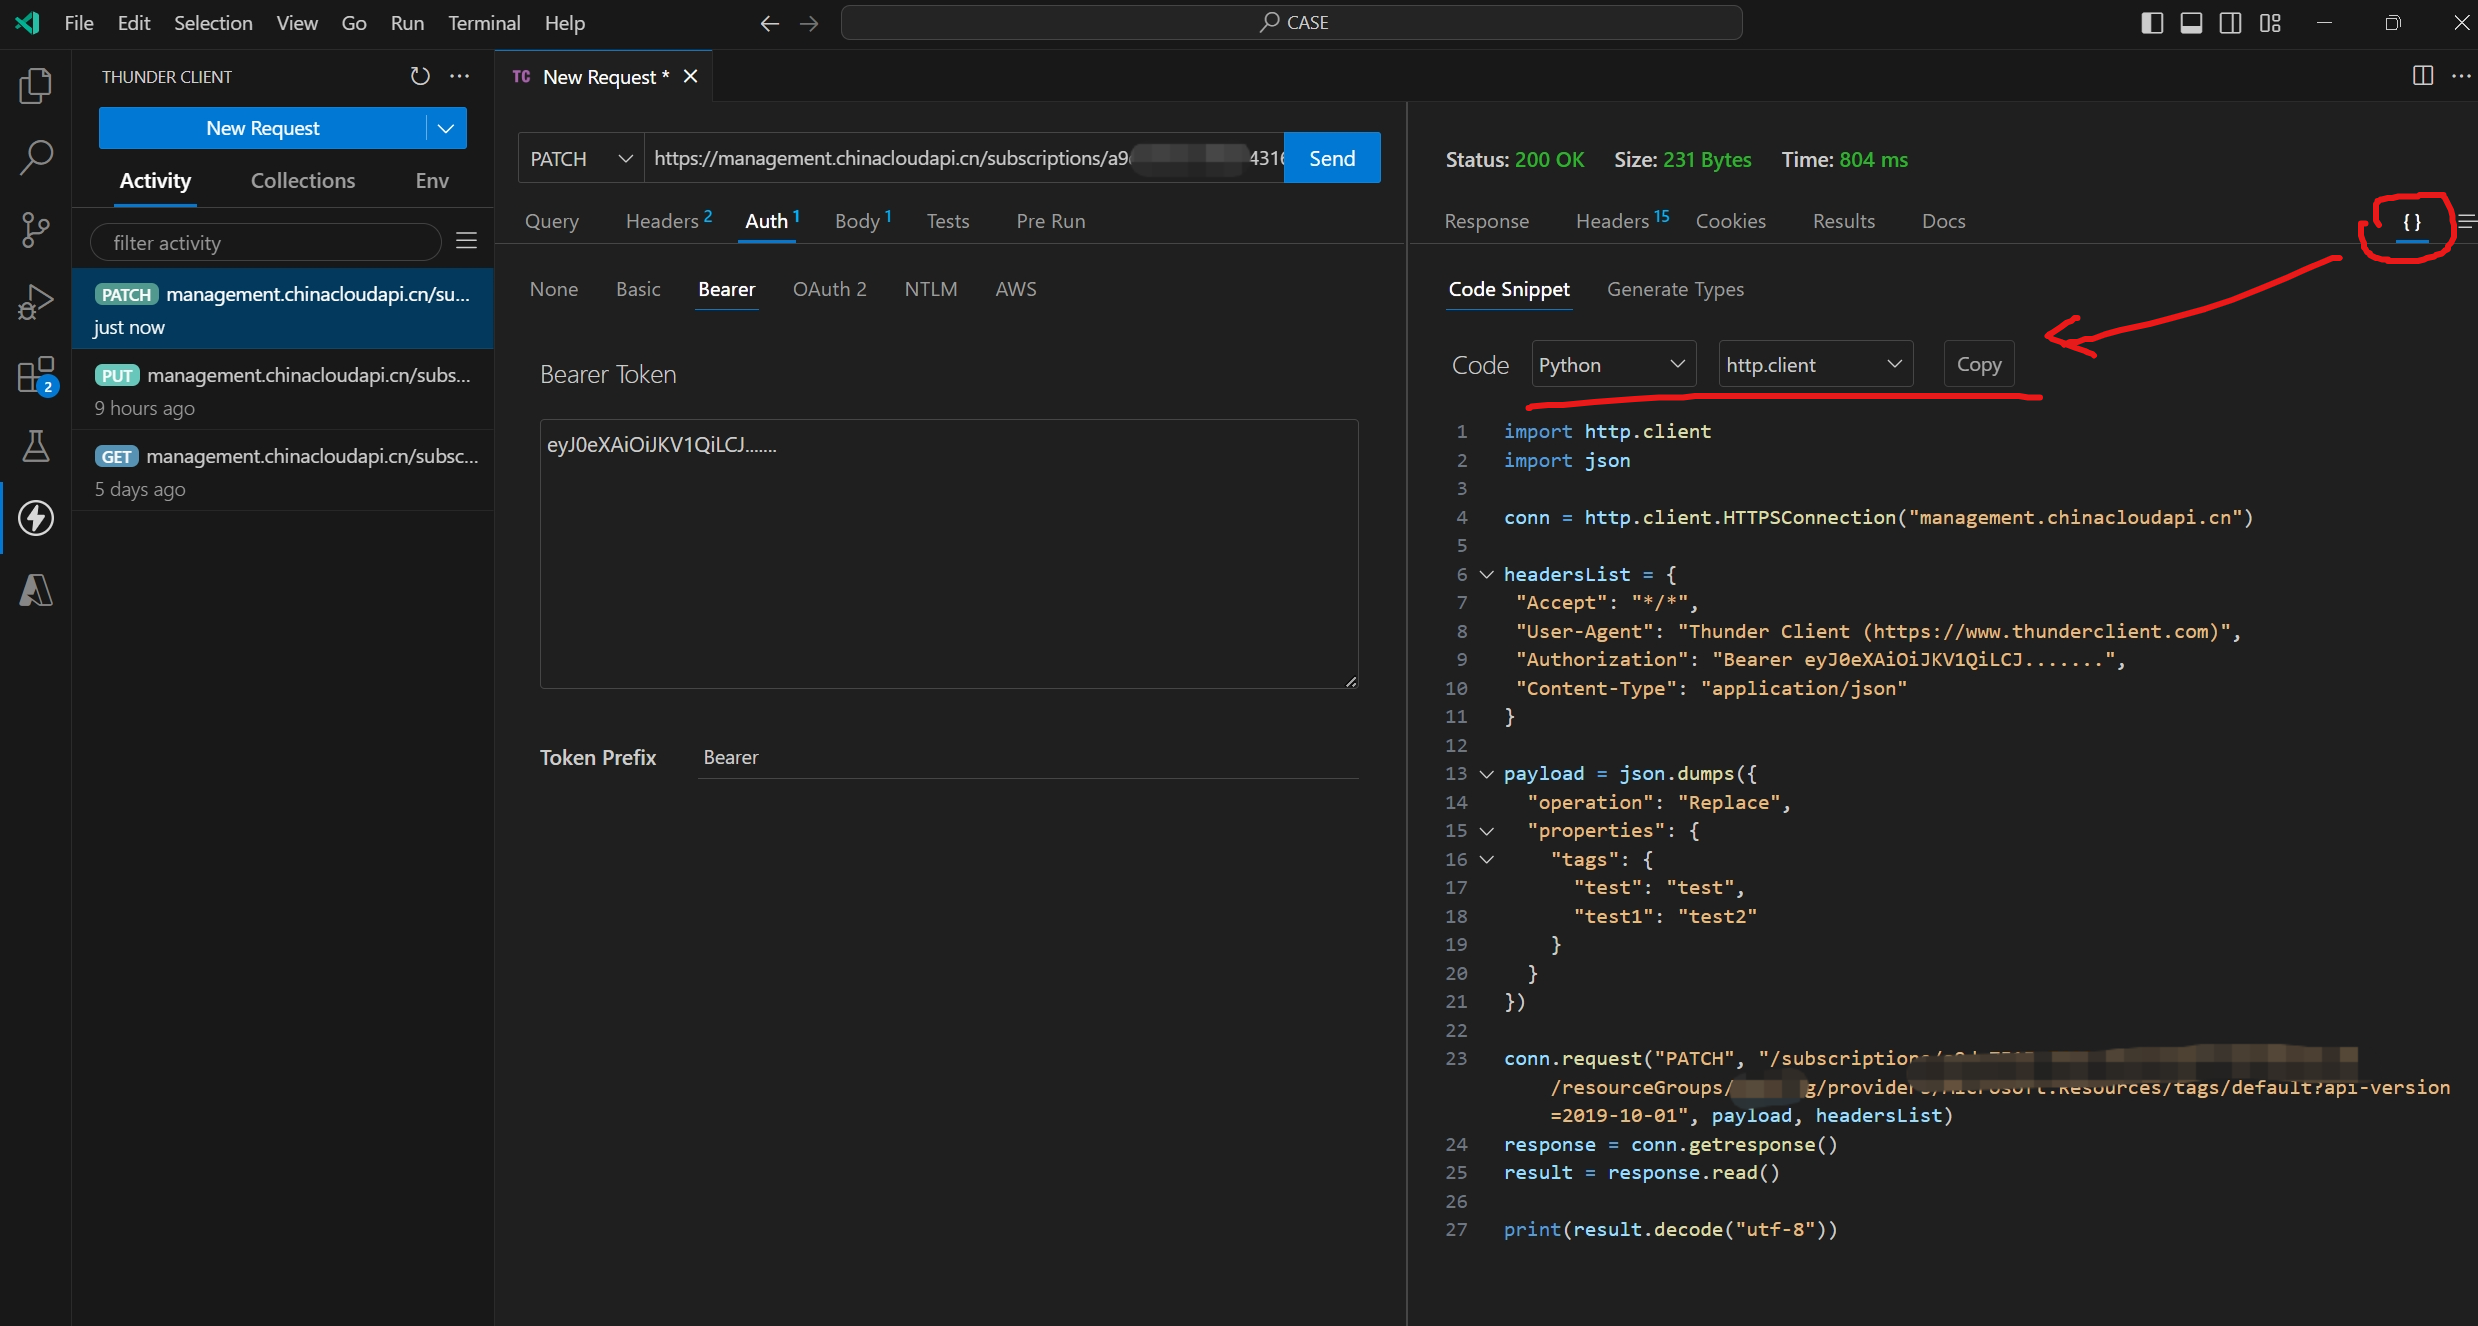 【Azure Developer】如何透過Azure Portal快速獲取到對應操作的API並轉換為Python程式碼